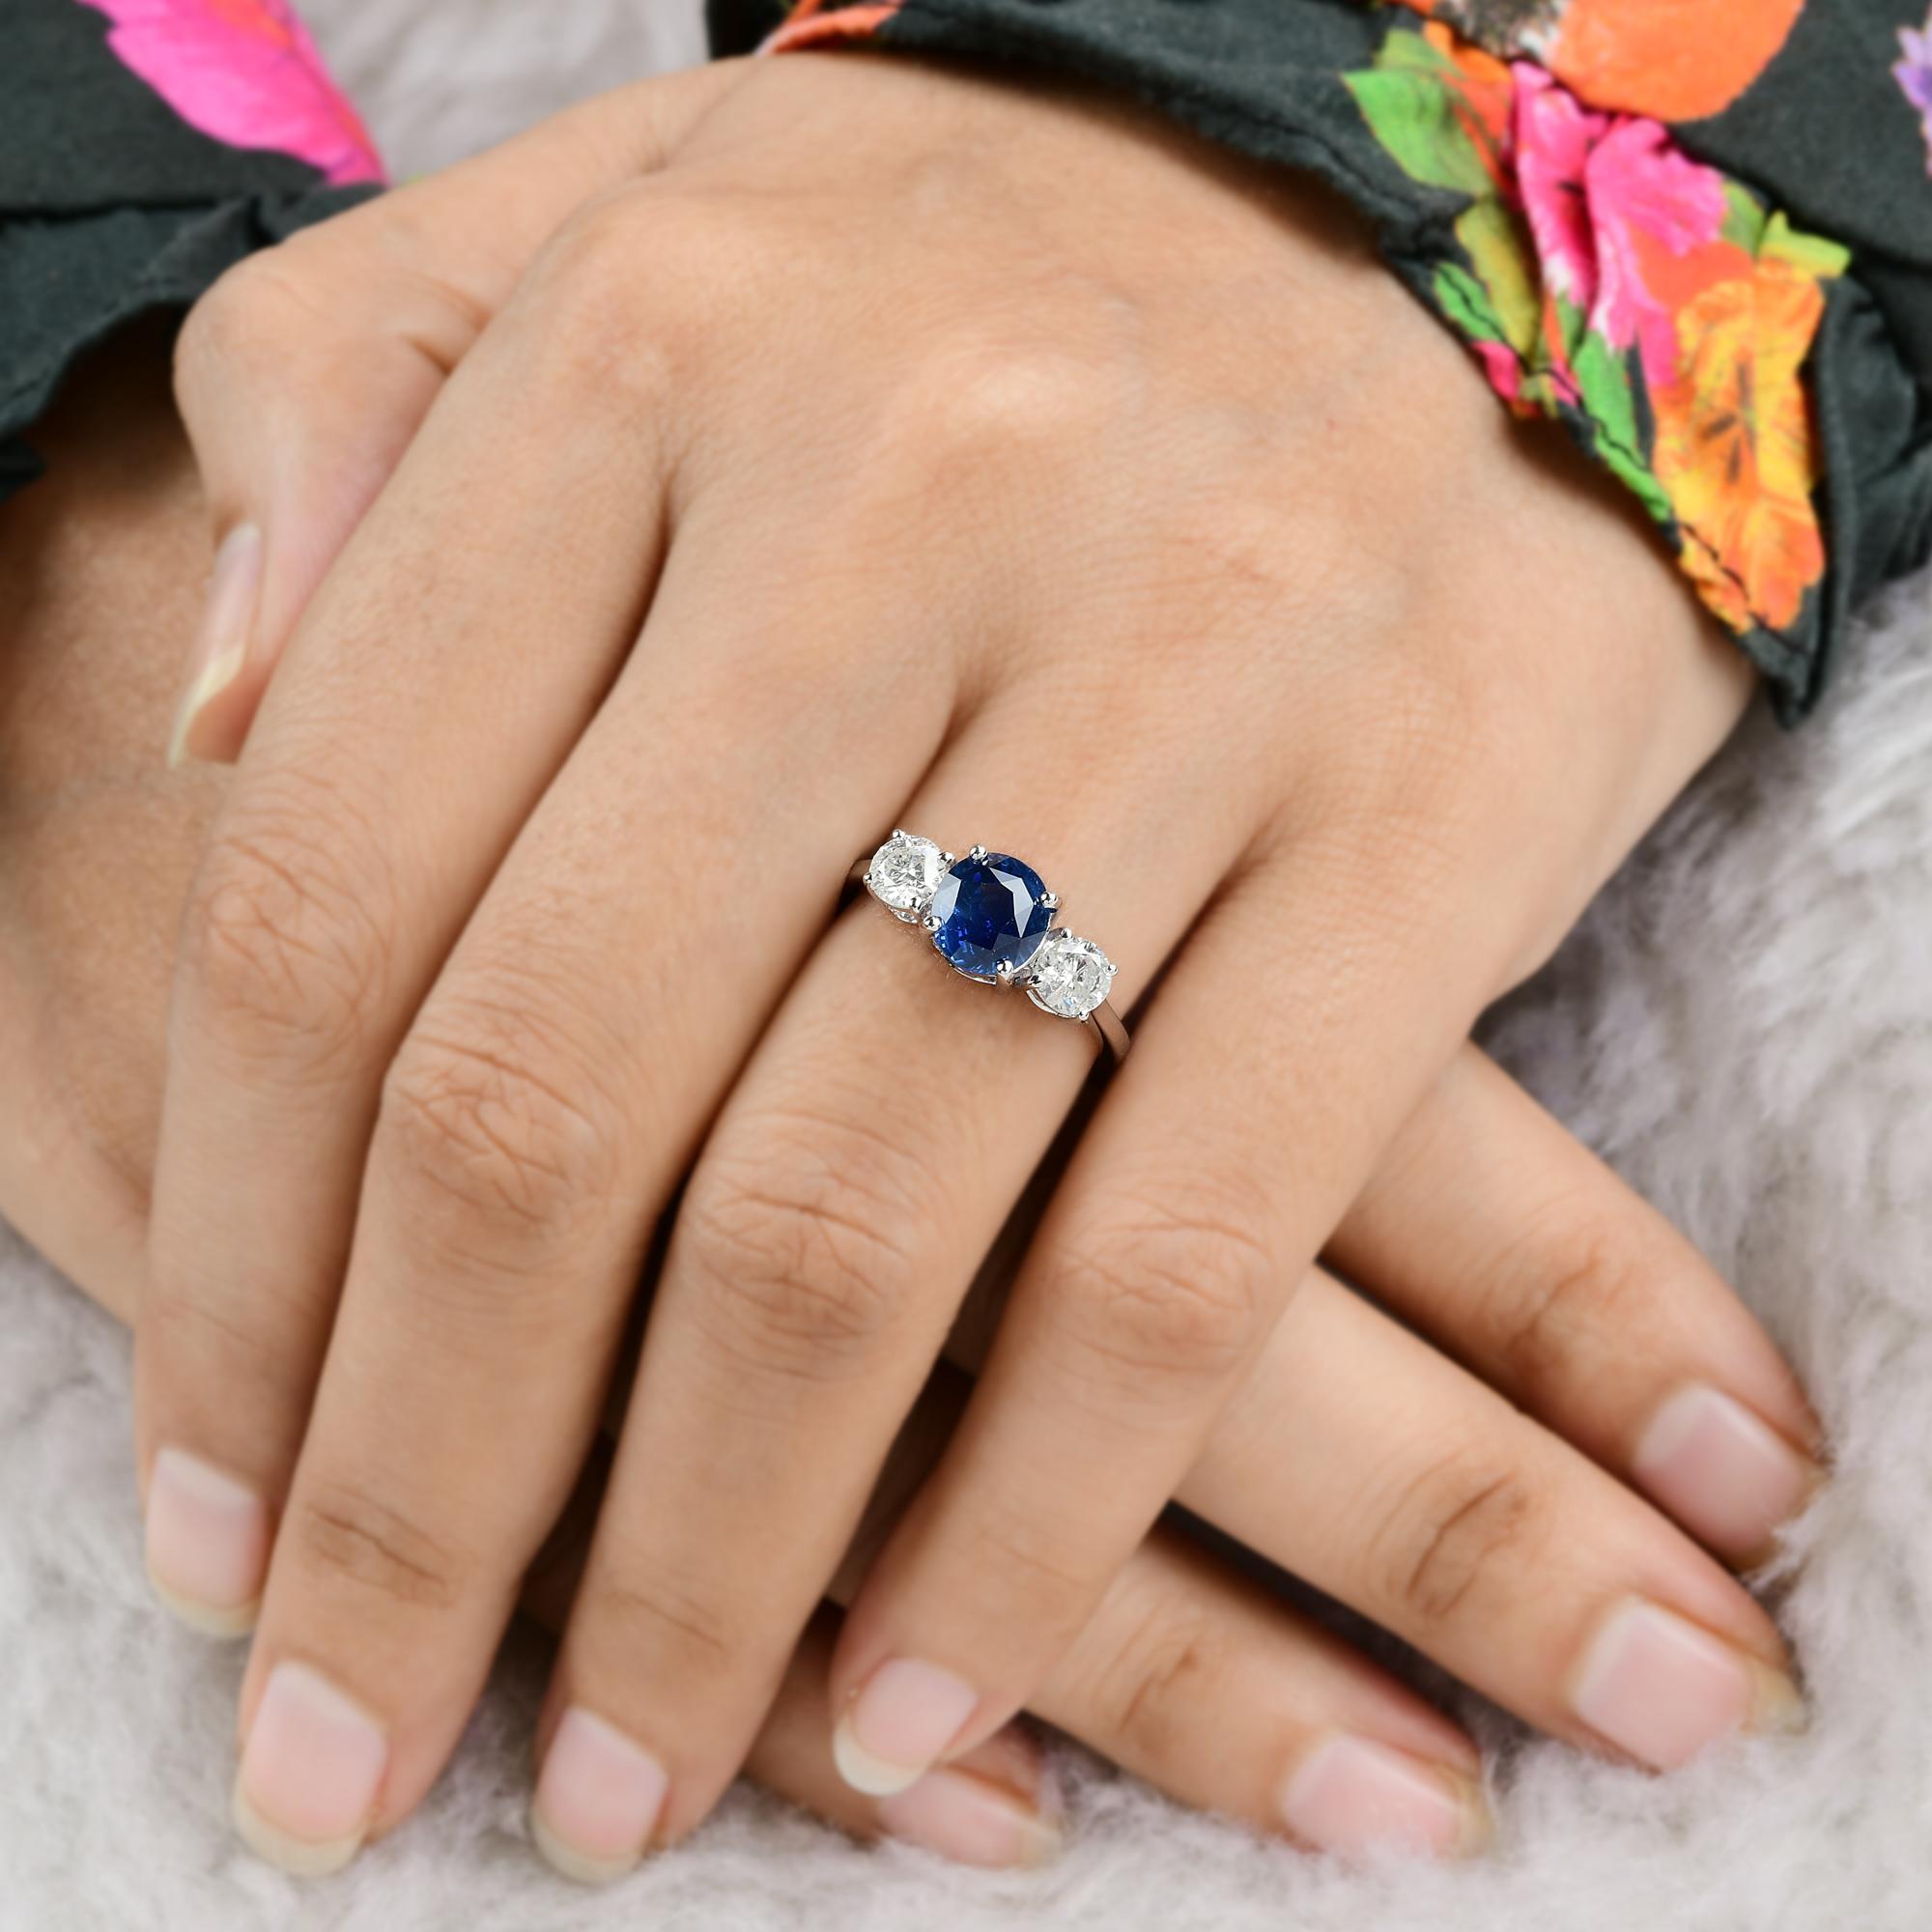 For Sale:  Blue Sapphire Gemstone Ring Diamond 18 Karat White Gold Handmade Fine Jewelry 4